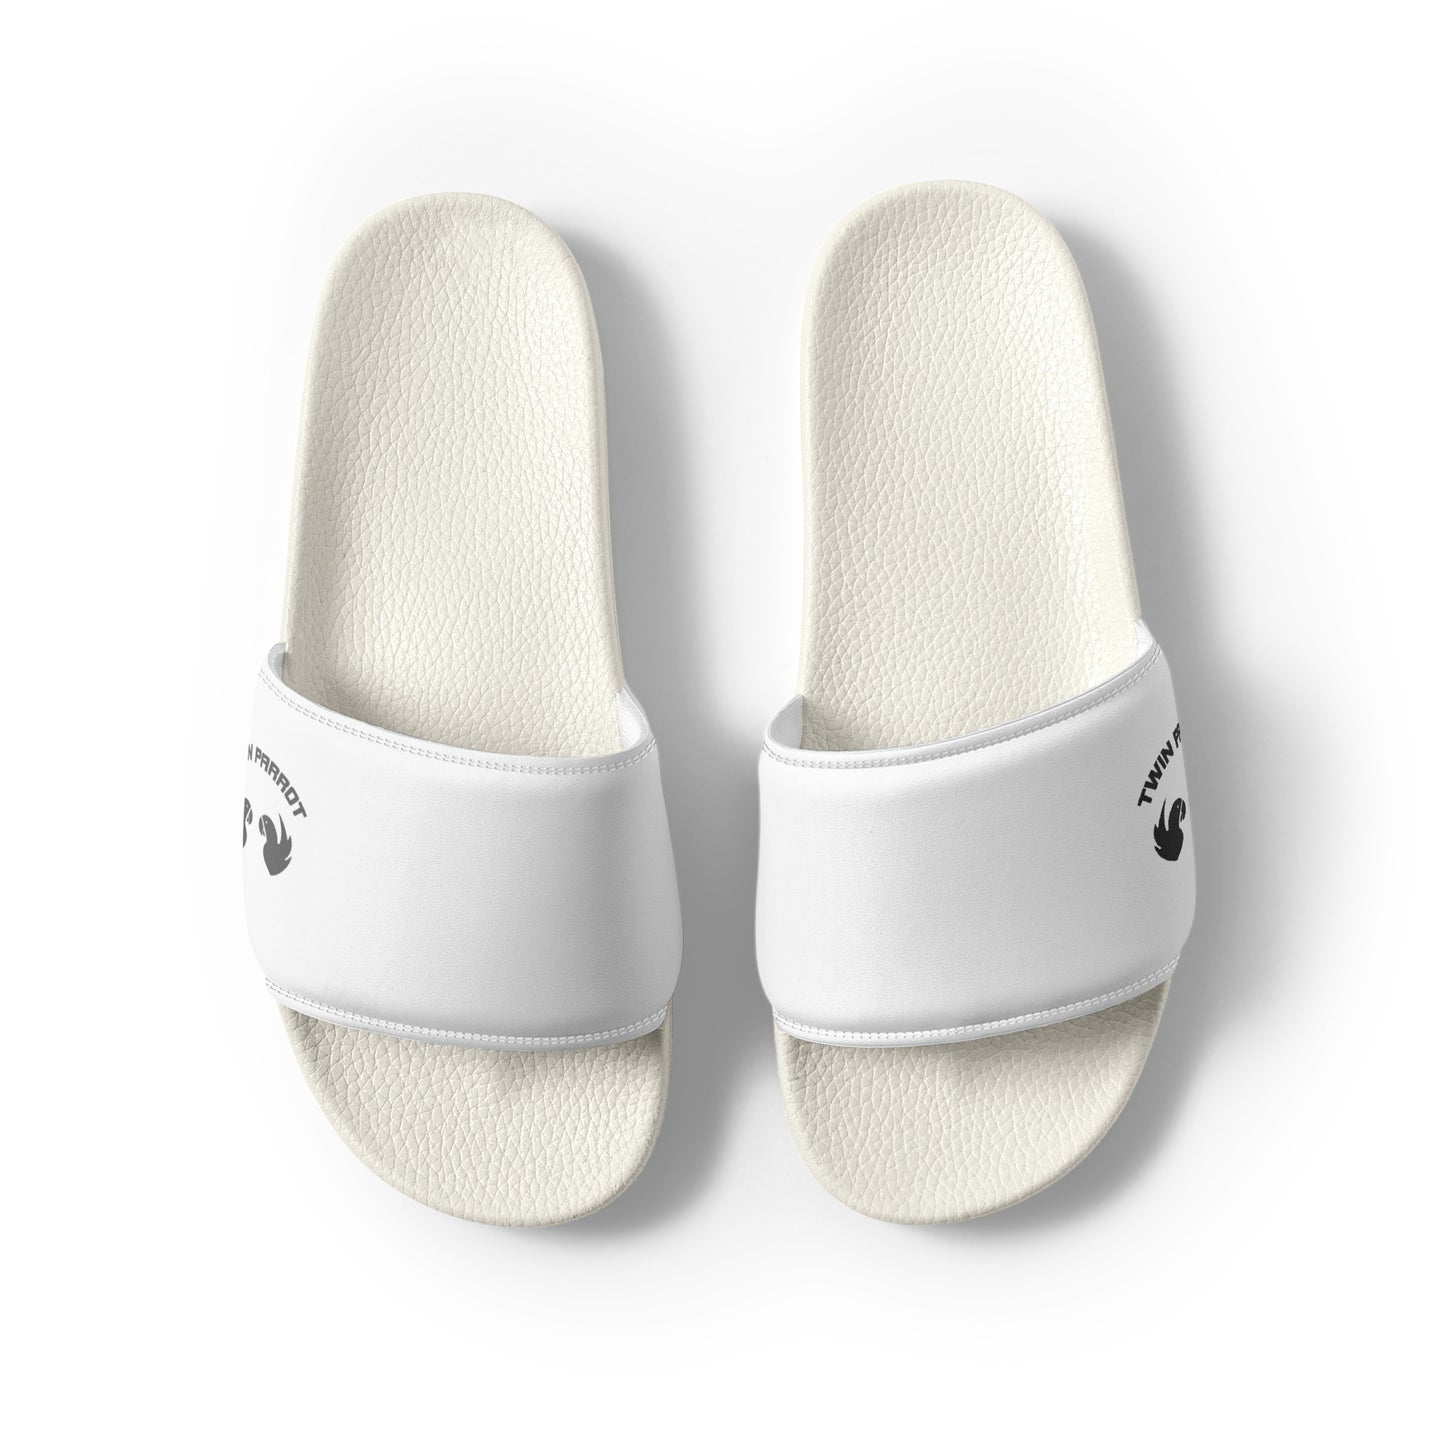 Cloud Comfort Slides: Handmade Luxury for Your Feet